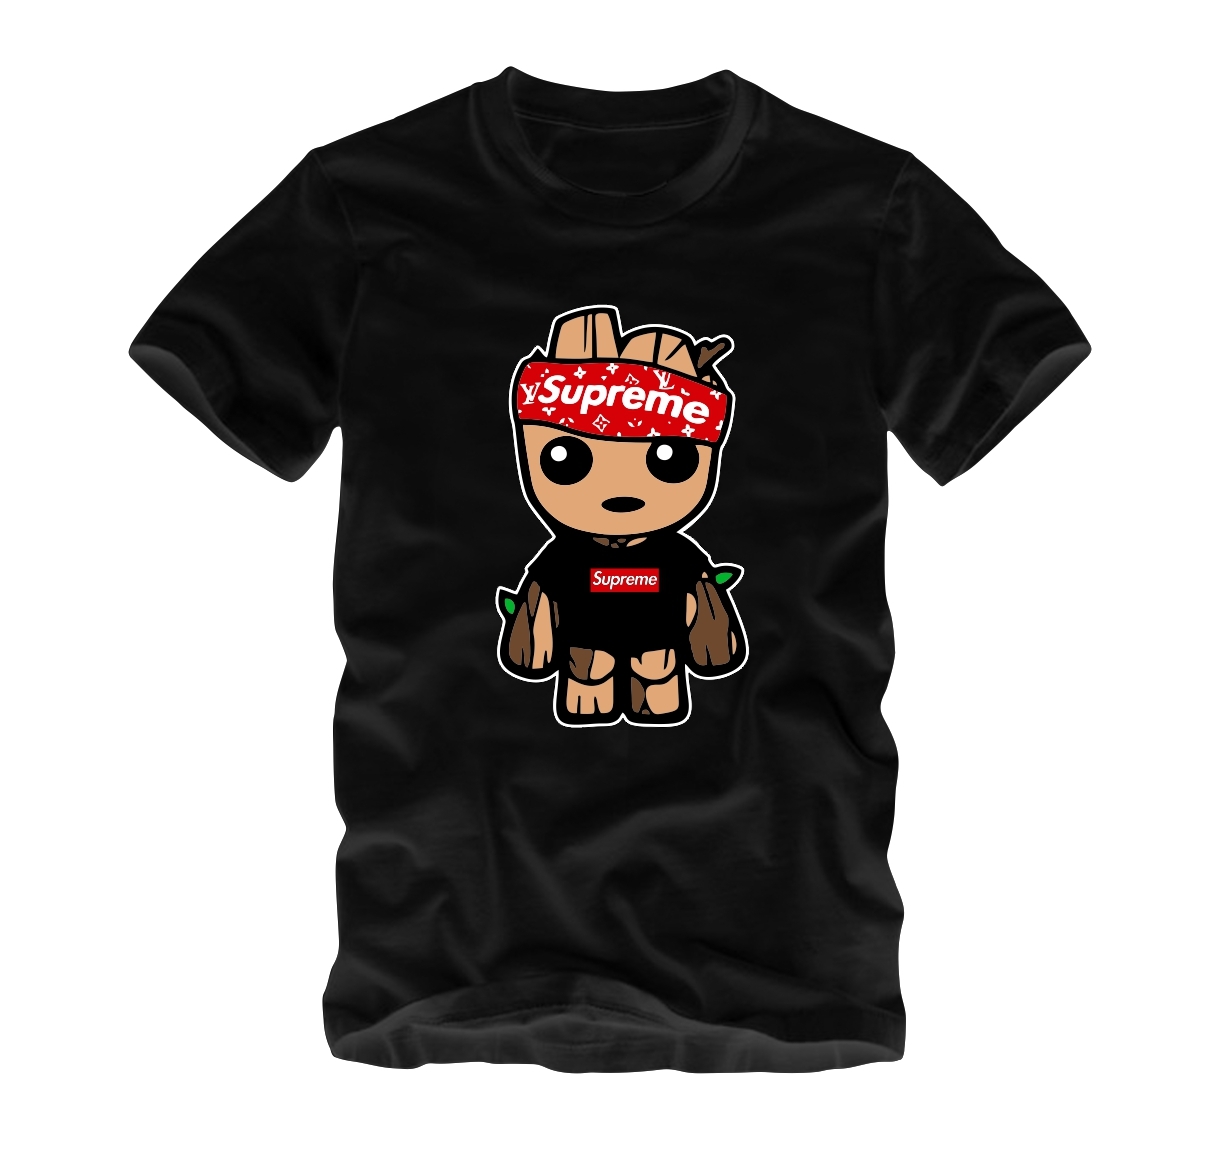 Baby Groot LV black Shirt, Supreme Style T-Shirt No Blunt or Cigar - T-Shirts, Tank Tops